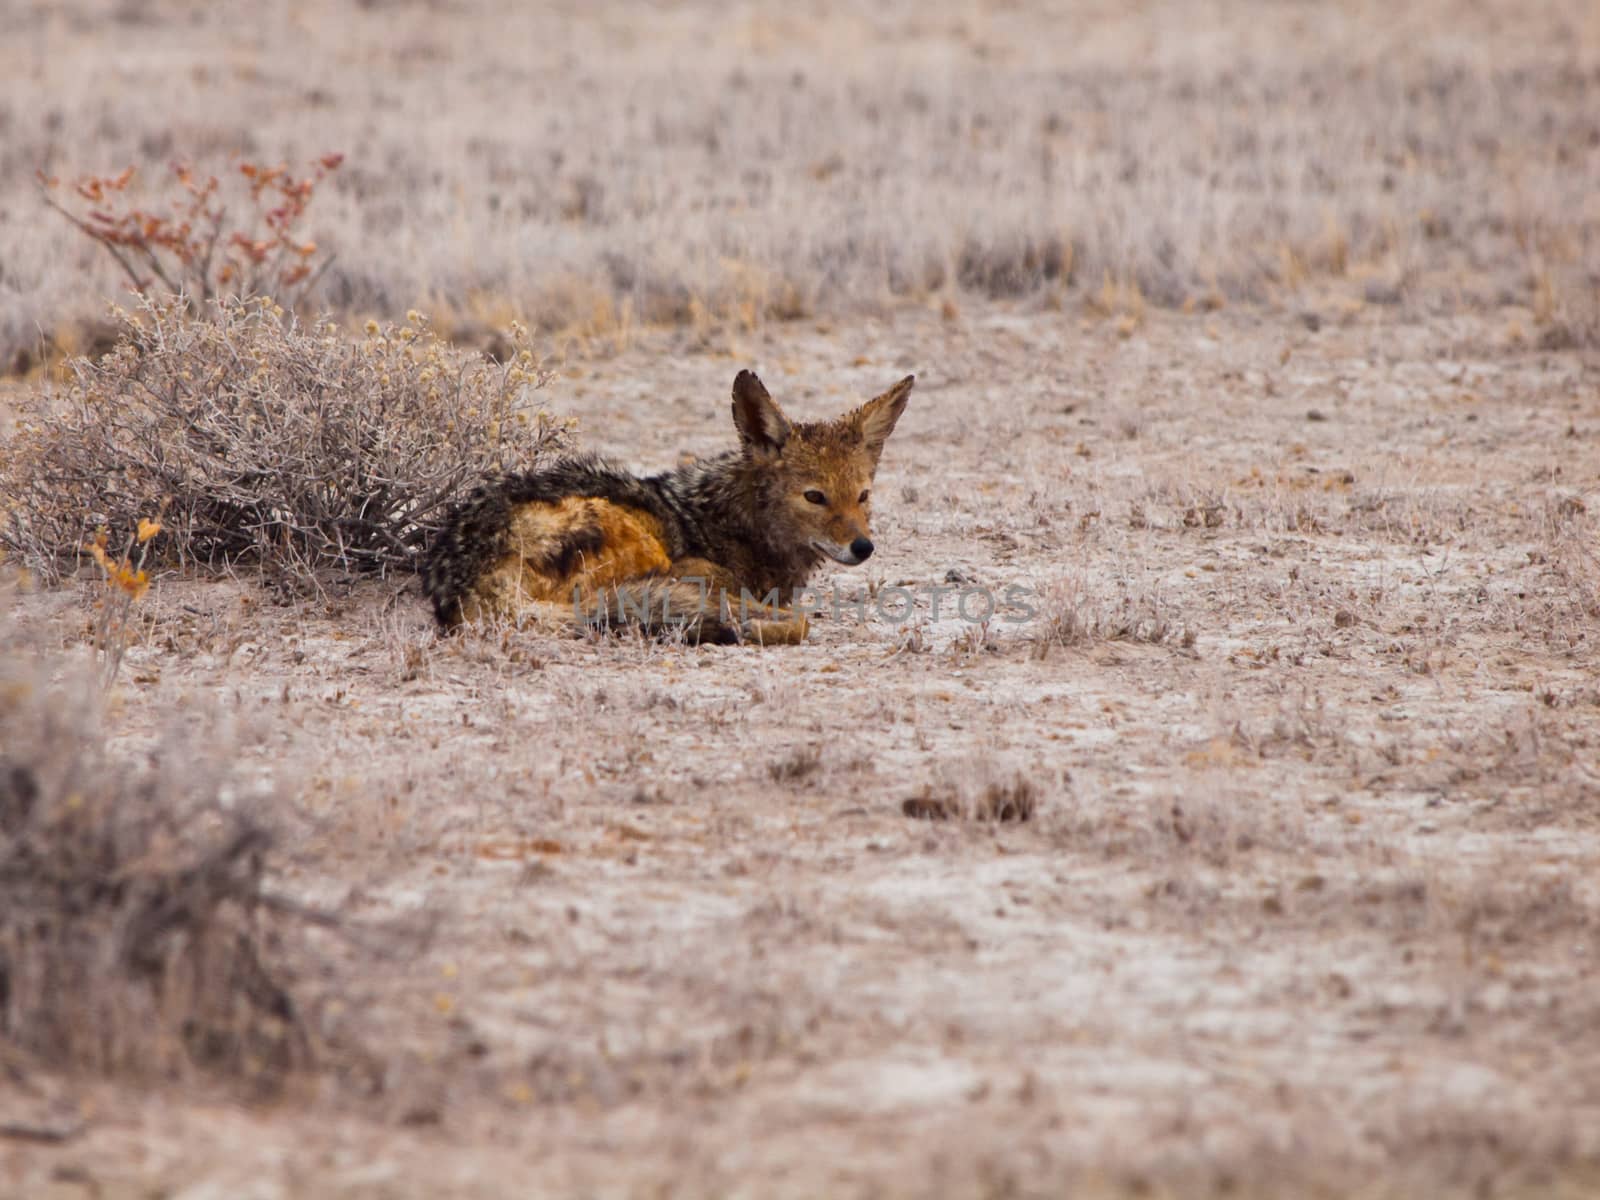 Black-backed Jackal lying on the dusty ground in Etosha National Park, Namibia, Africa by pyty